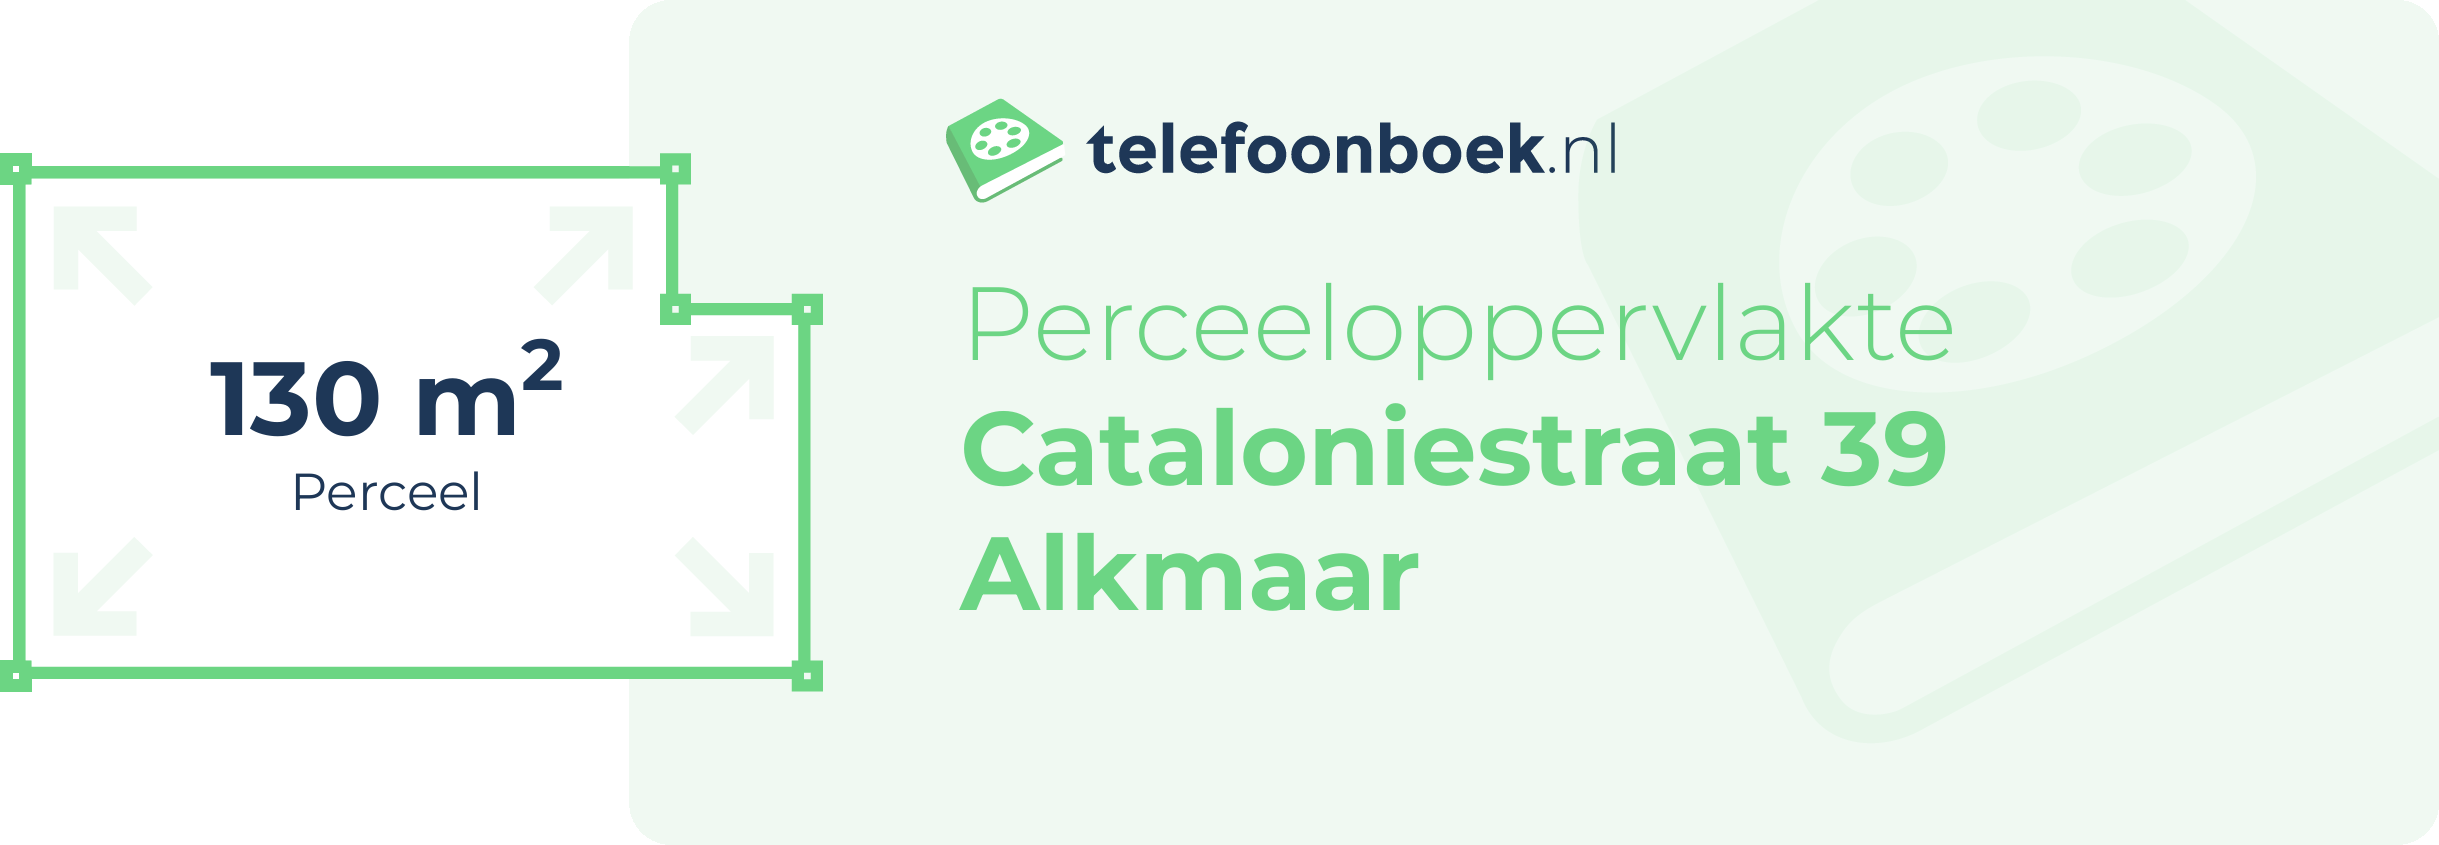 Perceeloppervlakte Cataloniestraat 39 Alkmaar